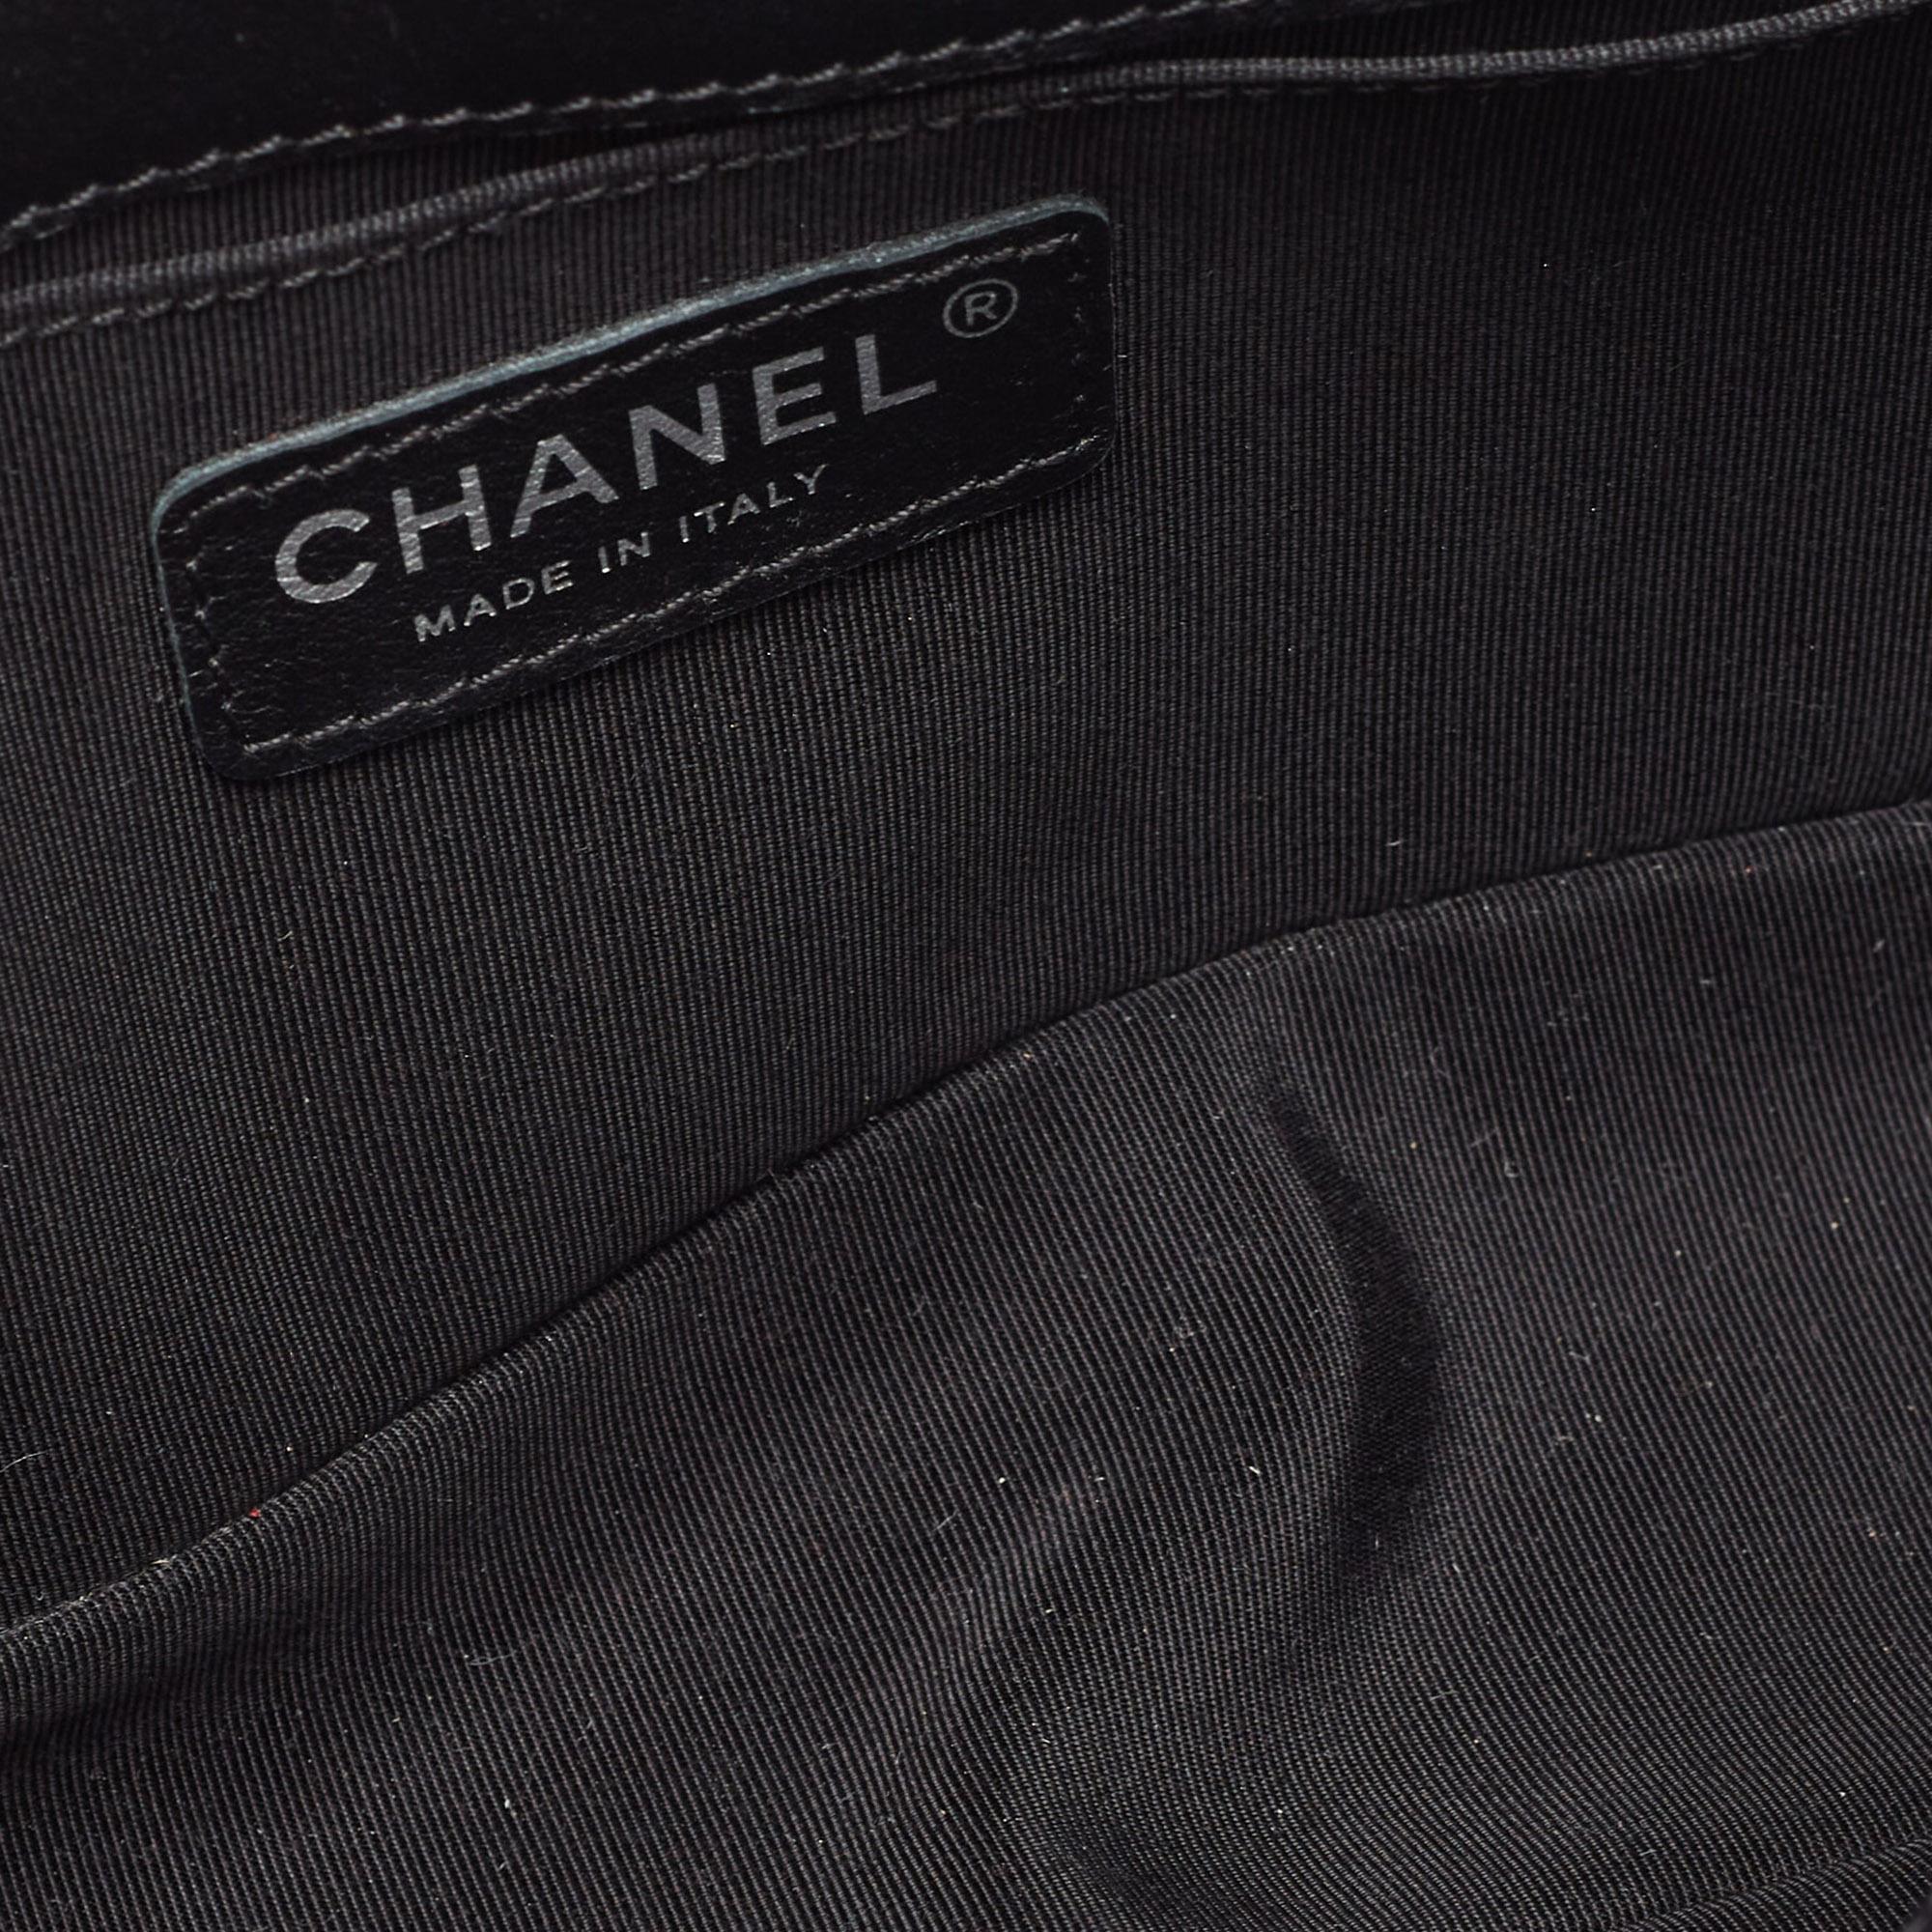 Chanel Black Leather Medium Enchained Boy Flap Bag 6